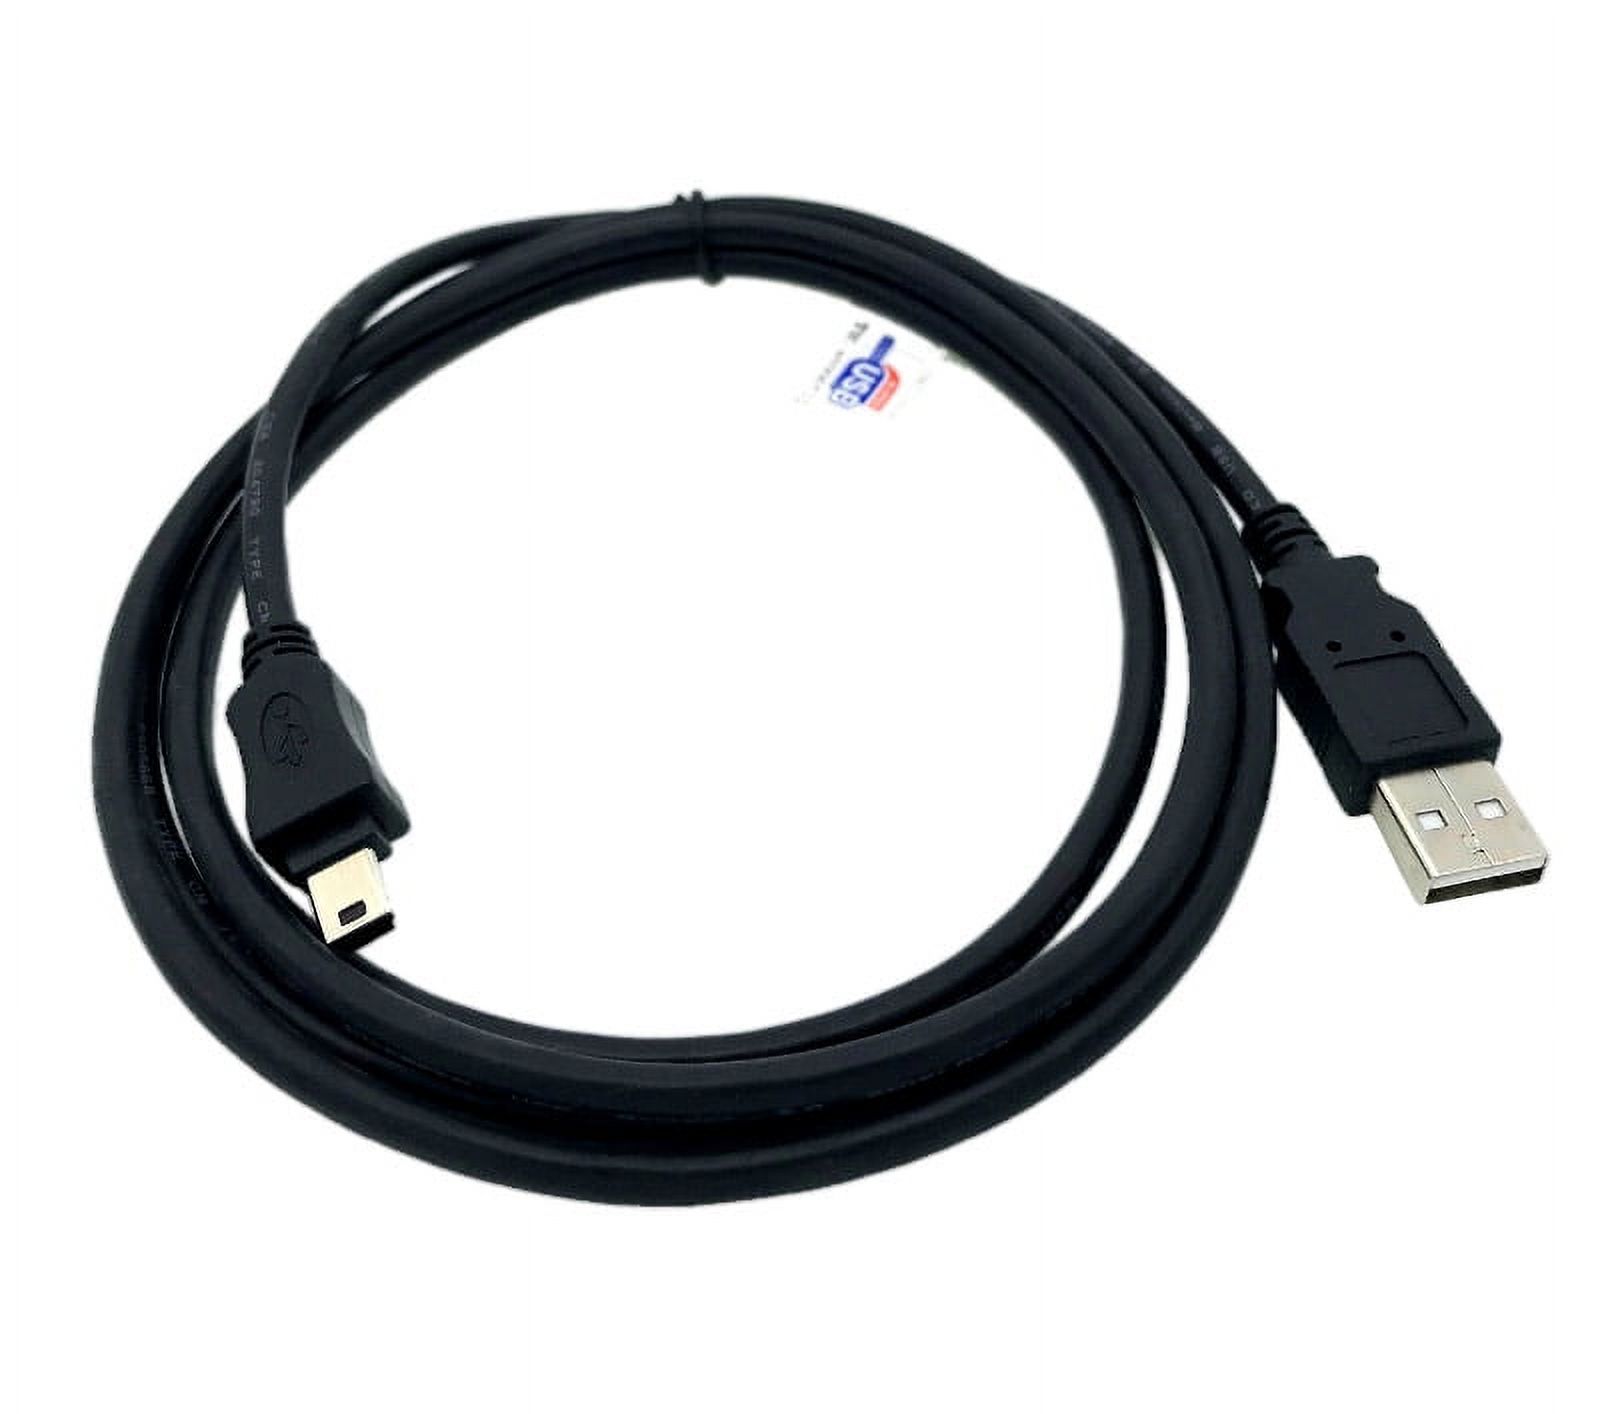 Kentek 6 Feet FT USB Cable Cord For CANON PowerSHOT A460, A490, EOS DIGITAL REBEL T4, T6 Camera - image 1 of 1